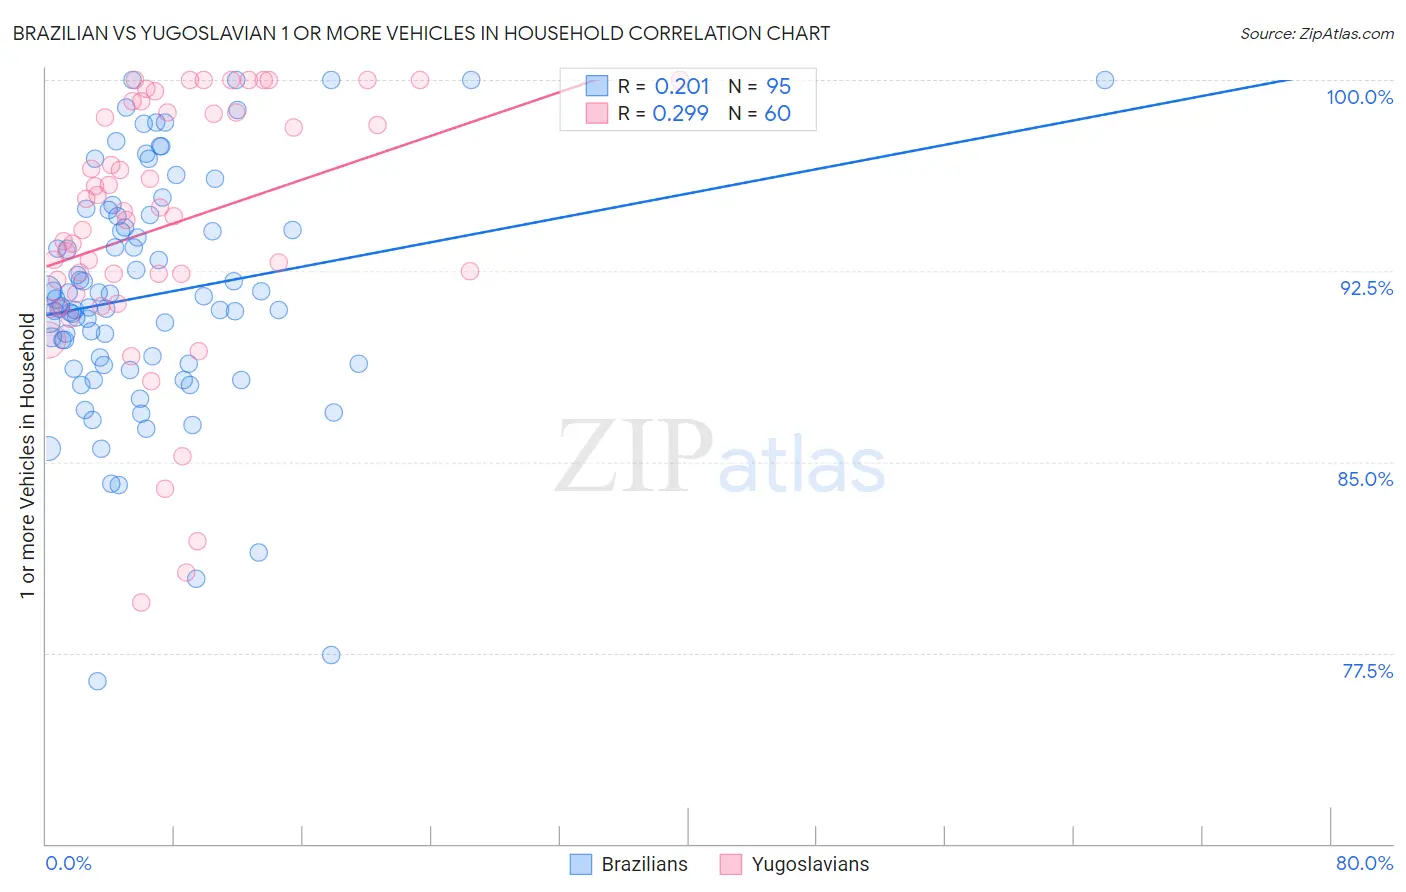 Brazilian vs Yugoslavian 1 or more Vehicles in Household